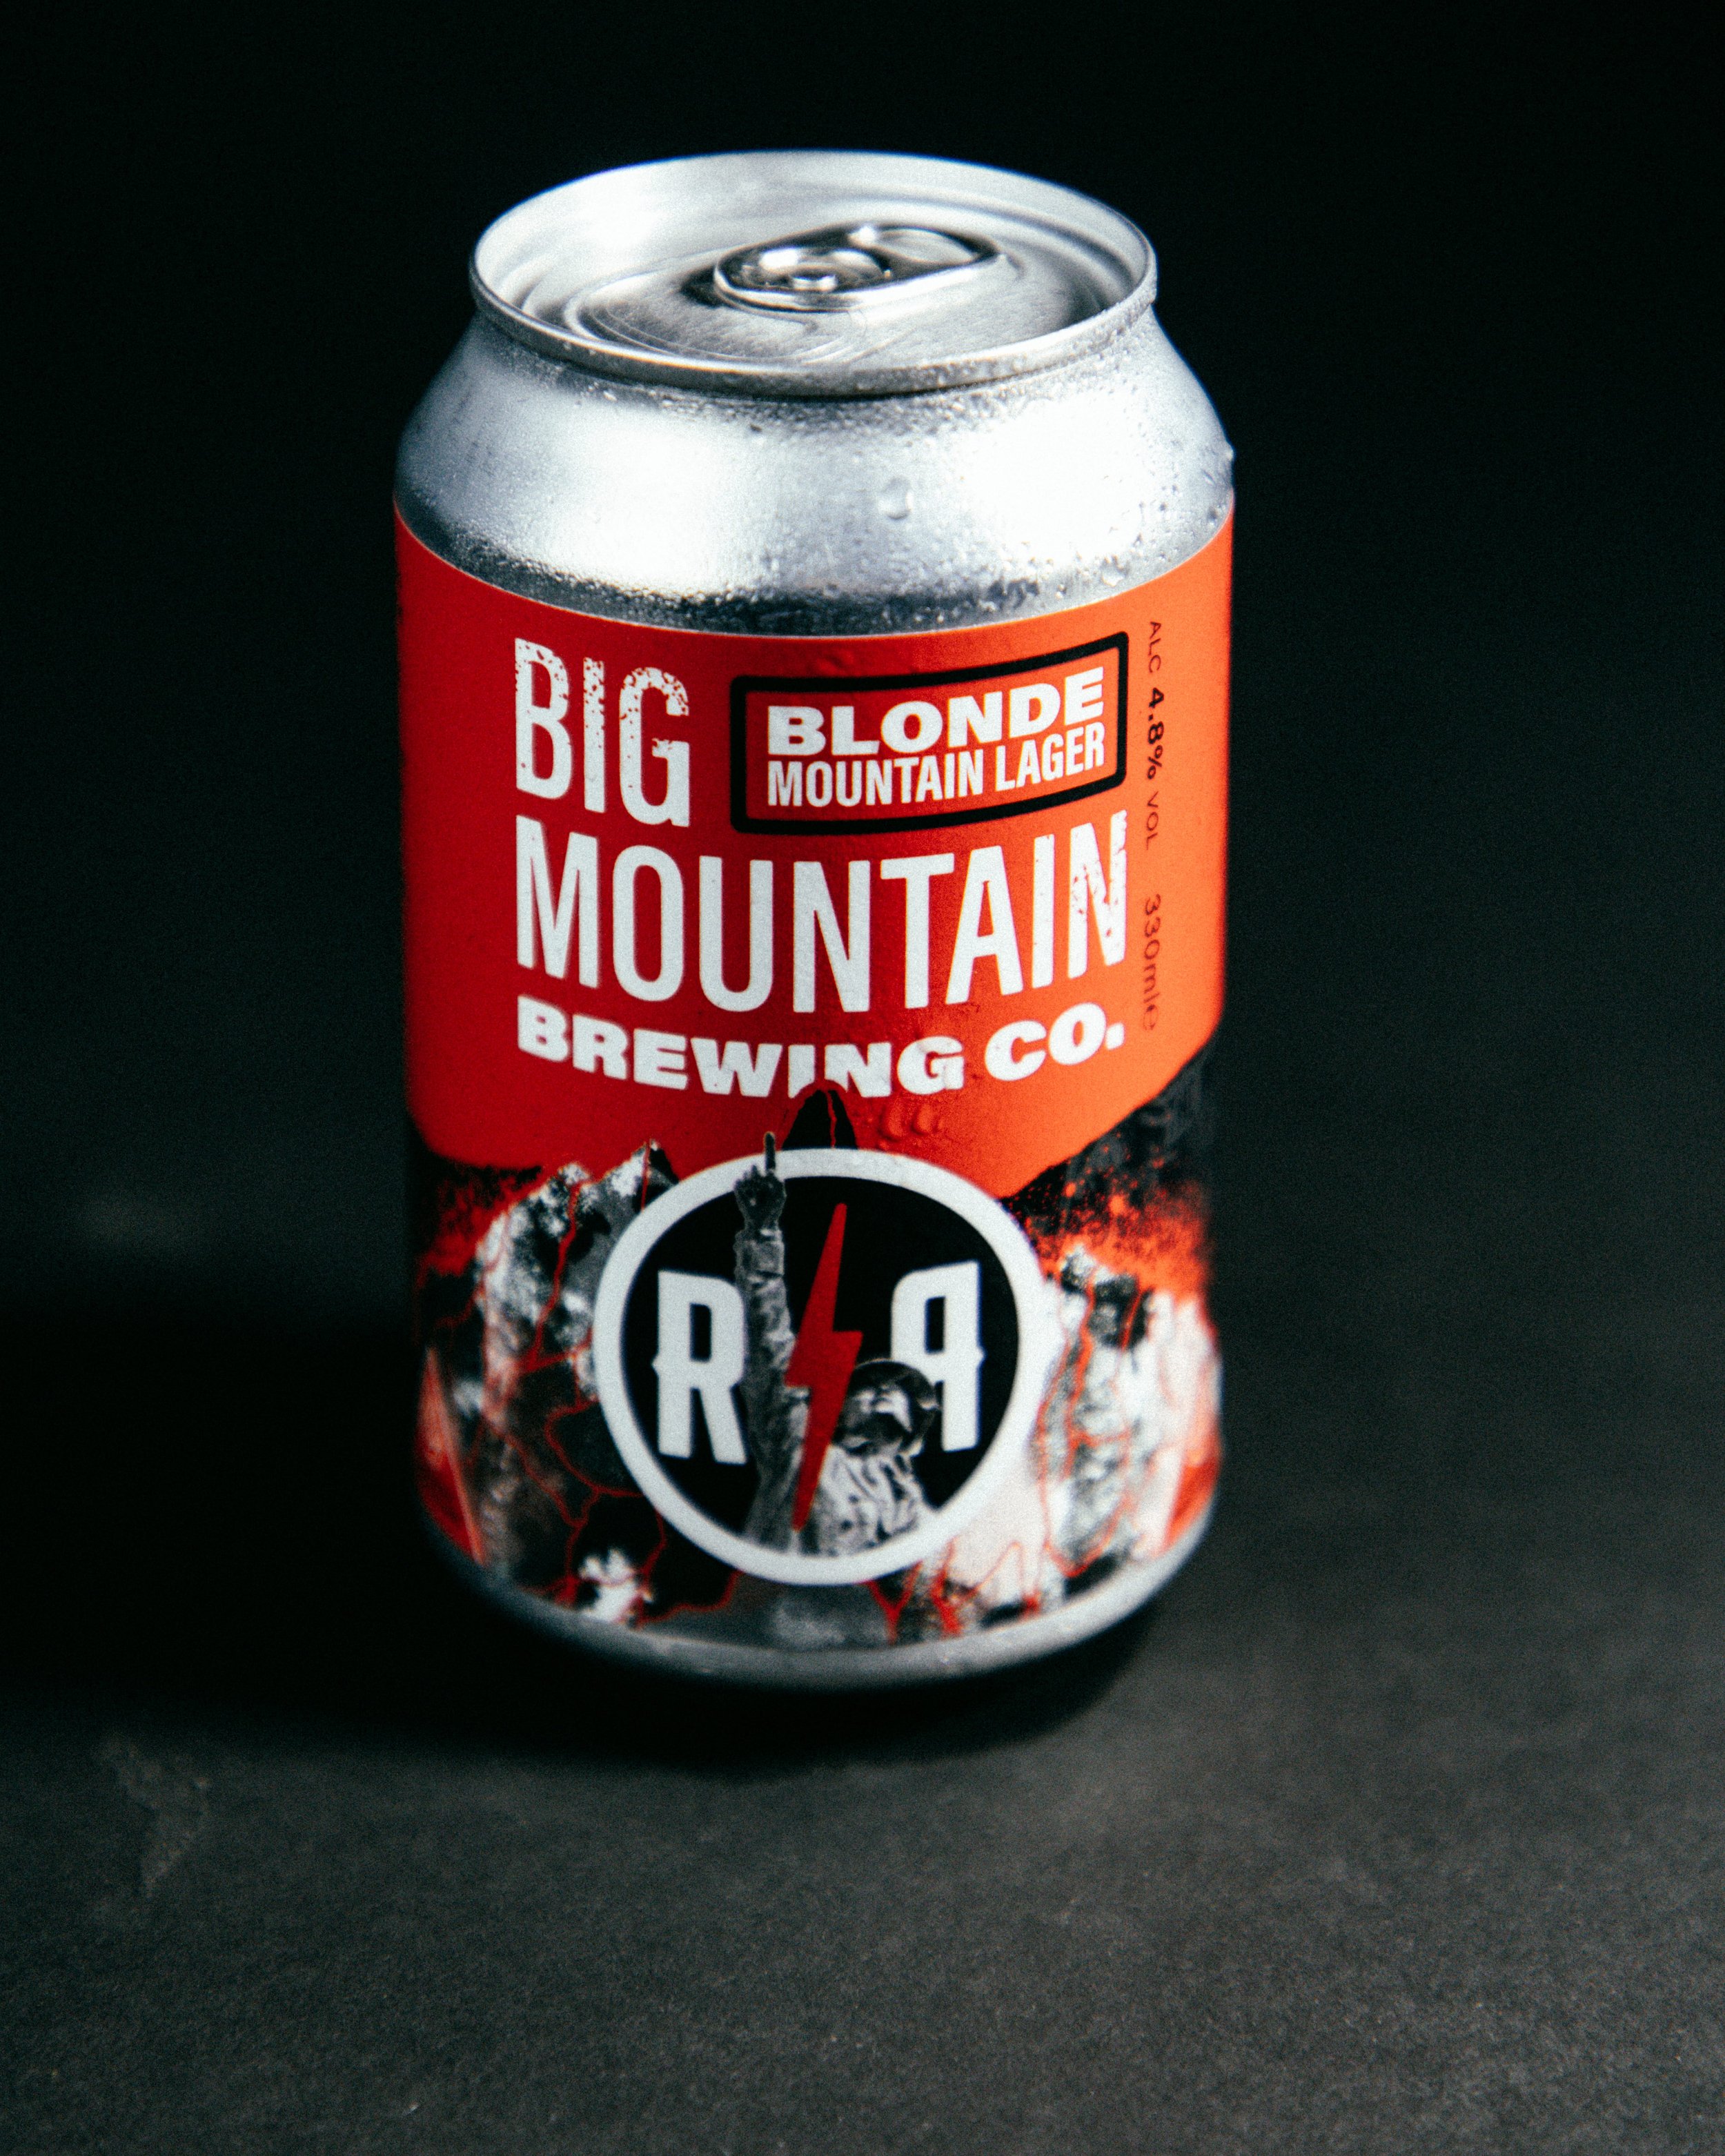 Blonde Mountain Lager  Big Mountain Brewing Co.